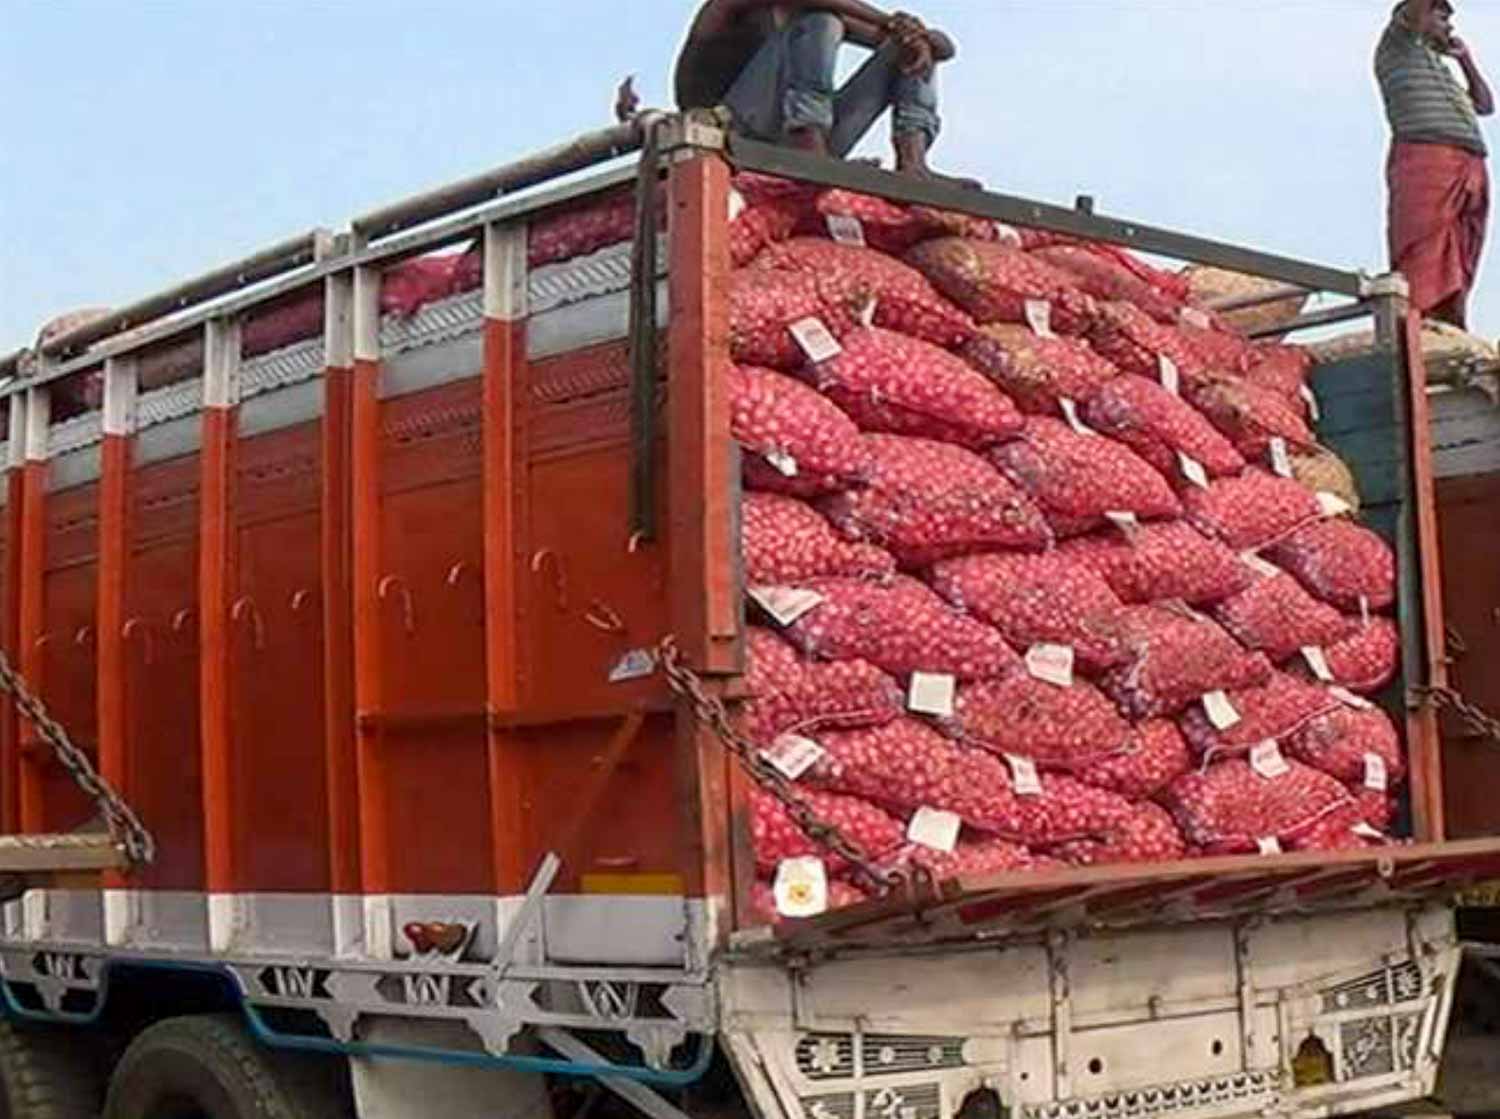 Onion truck